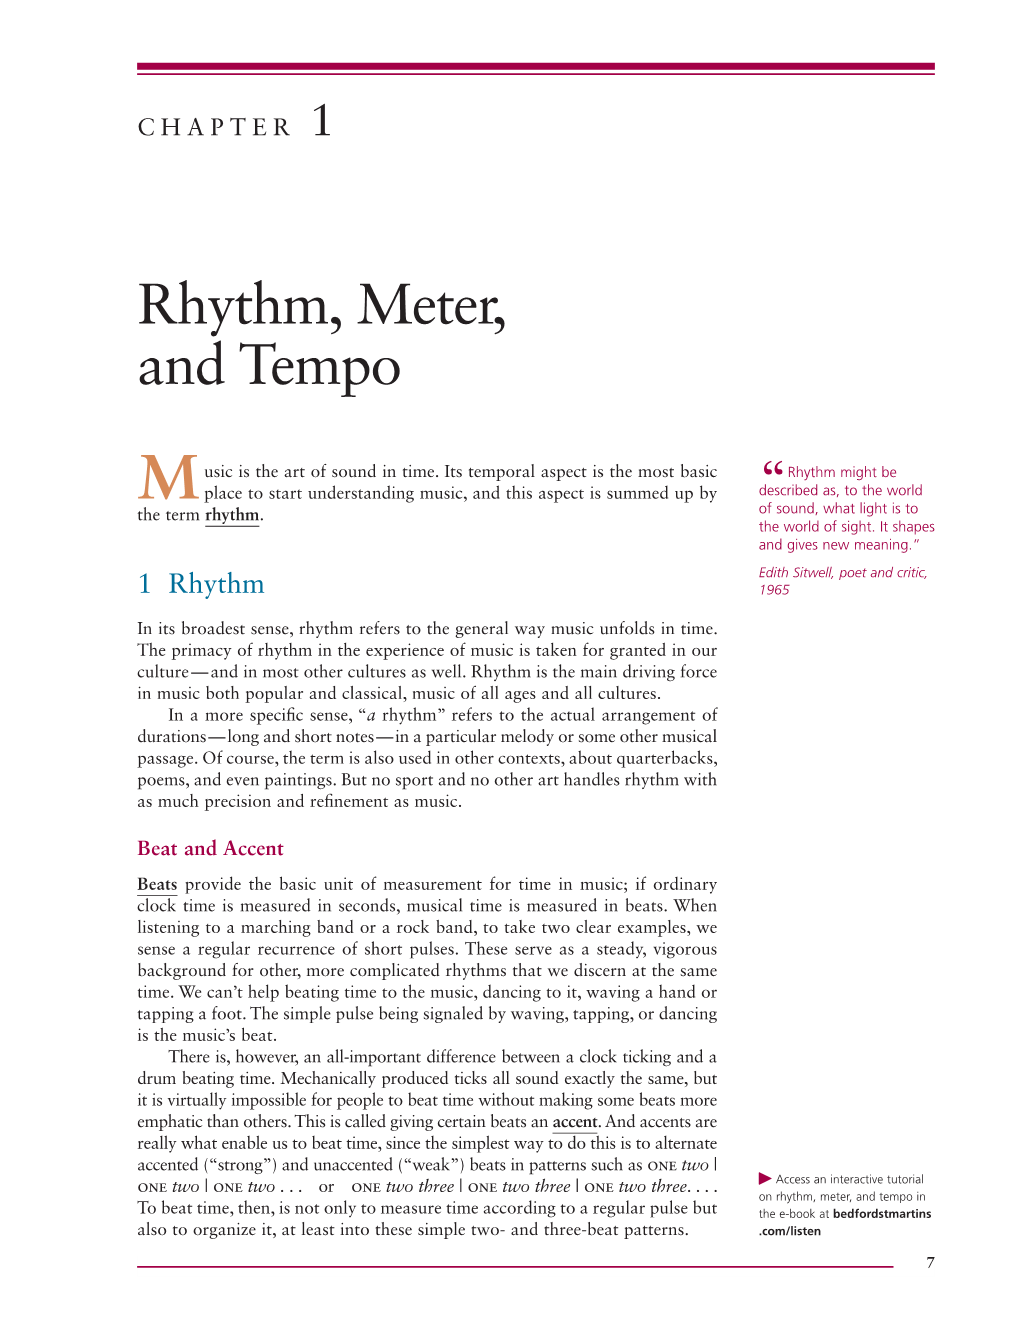 Rhythm, Meter, and Tempo